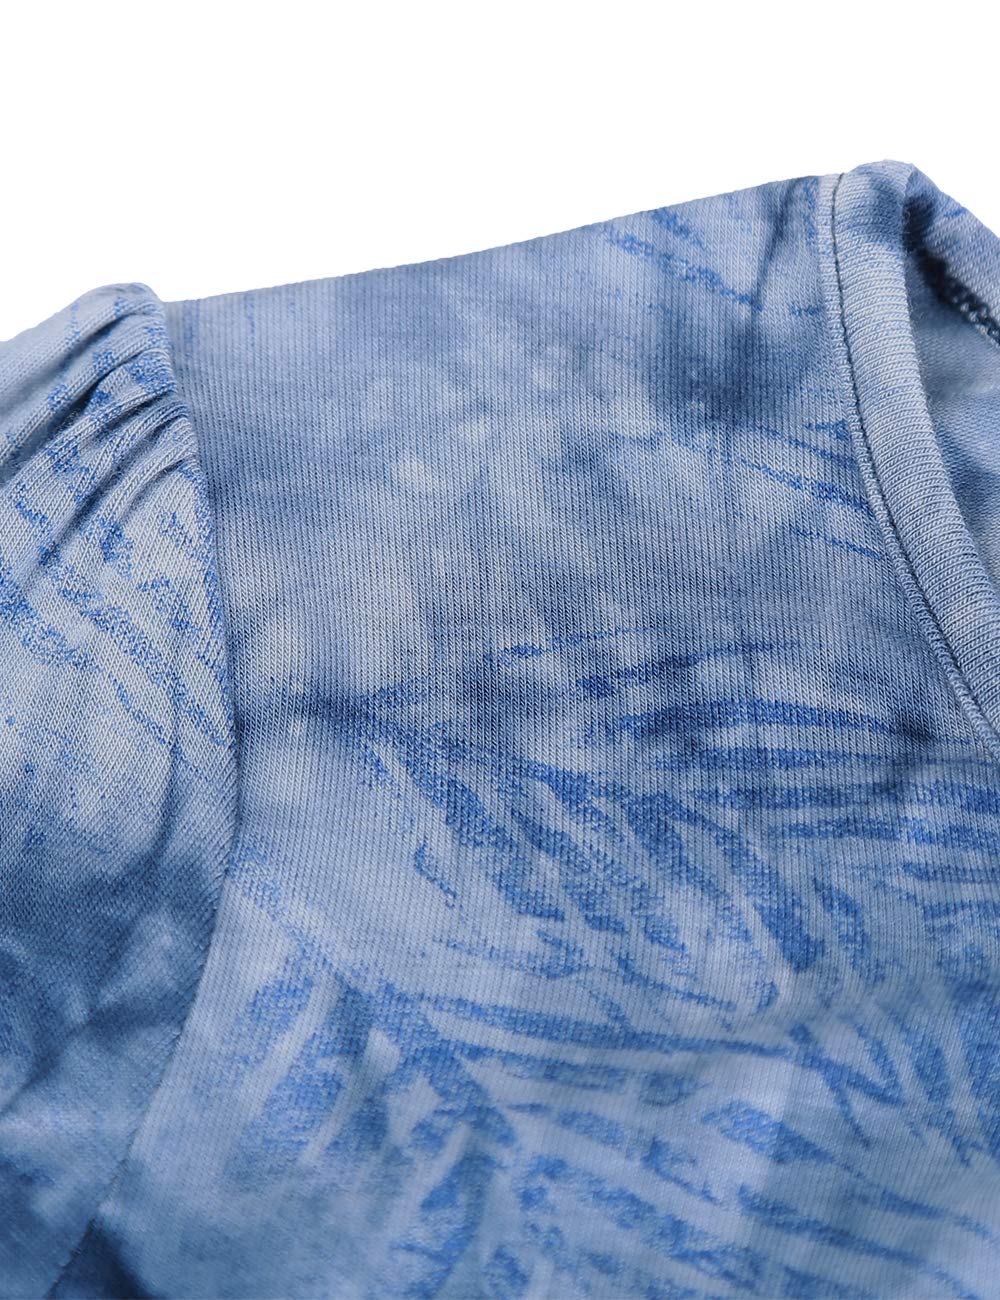 DJT Tie Dye Blue Leaves Women's Scoop Neck Short Sleeve Pleated Front Blouse Tunic Top